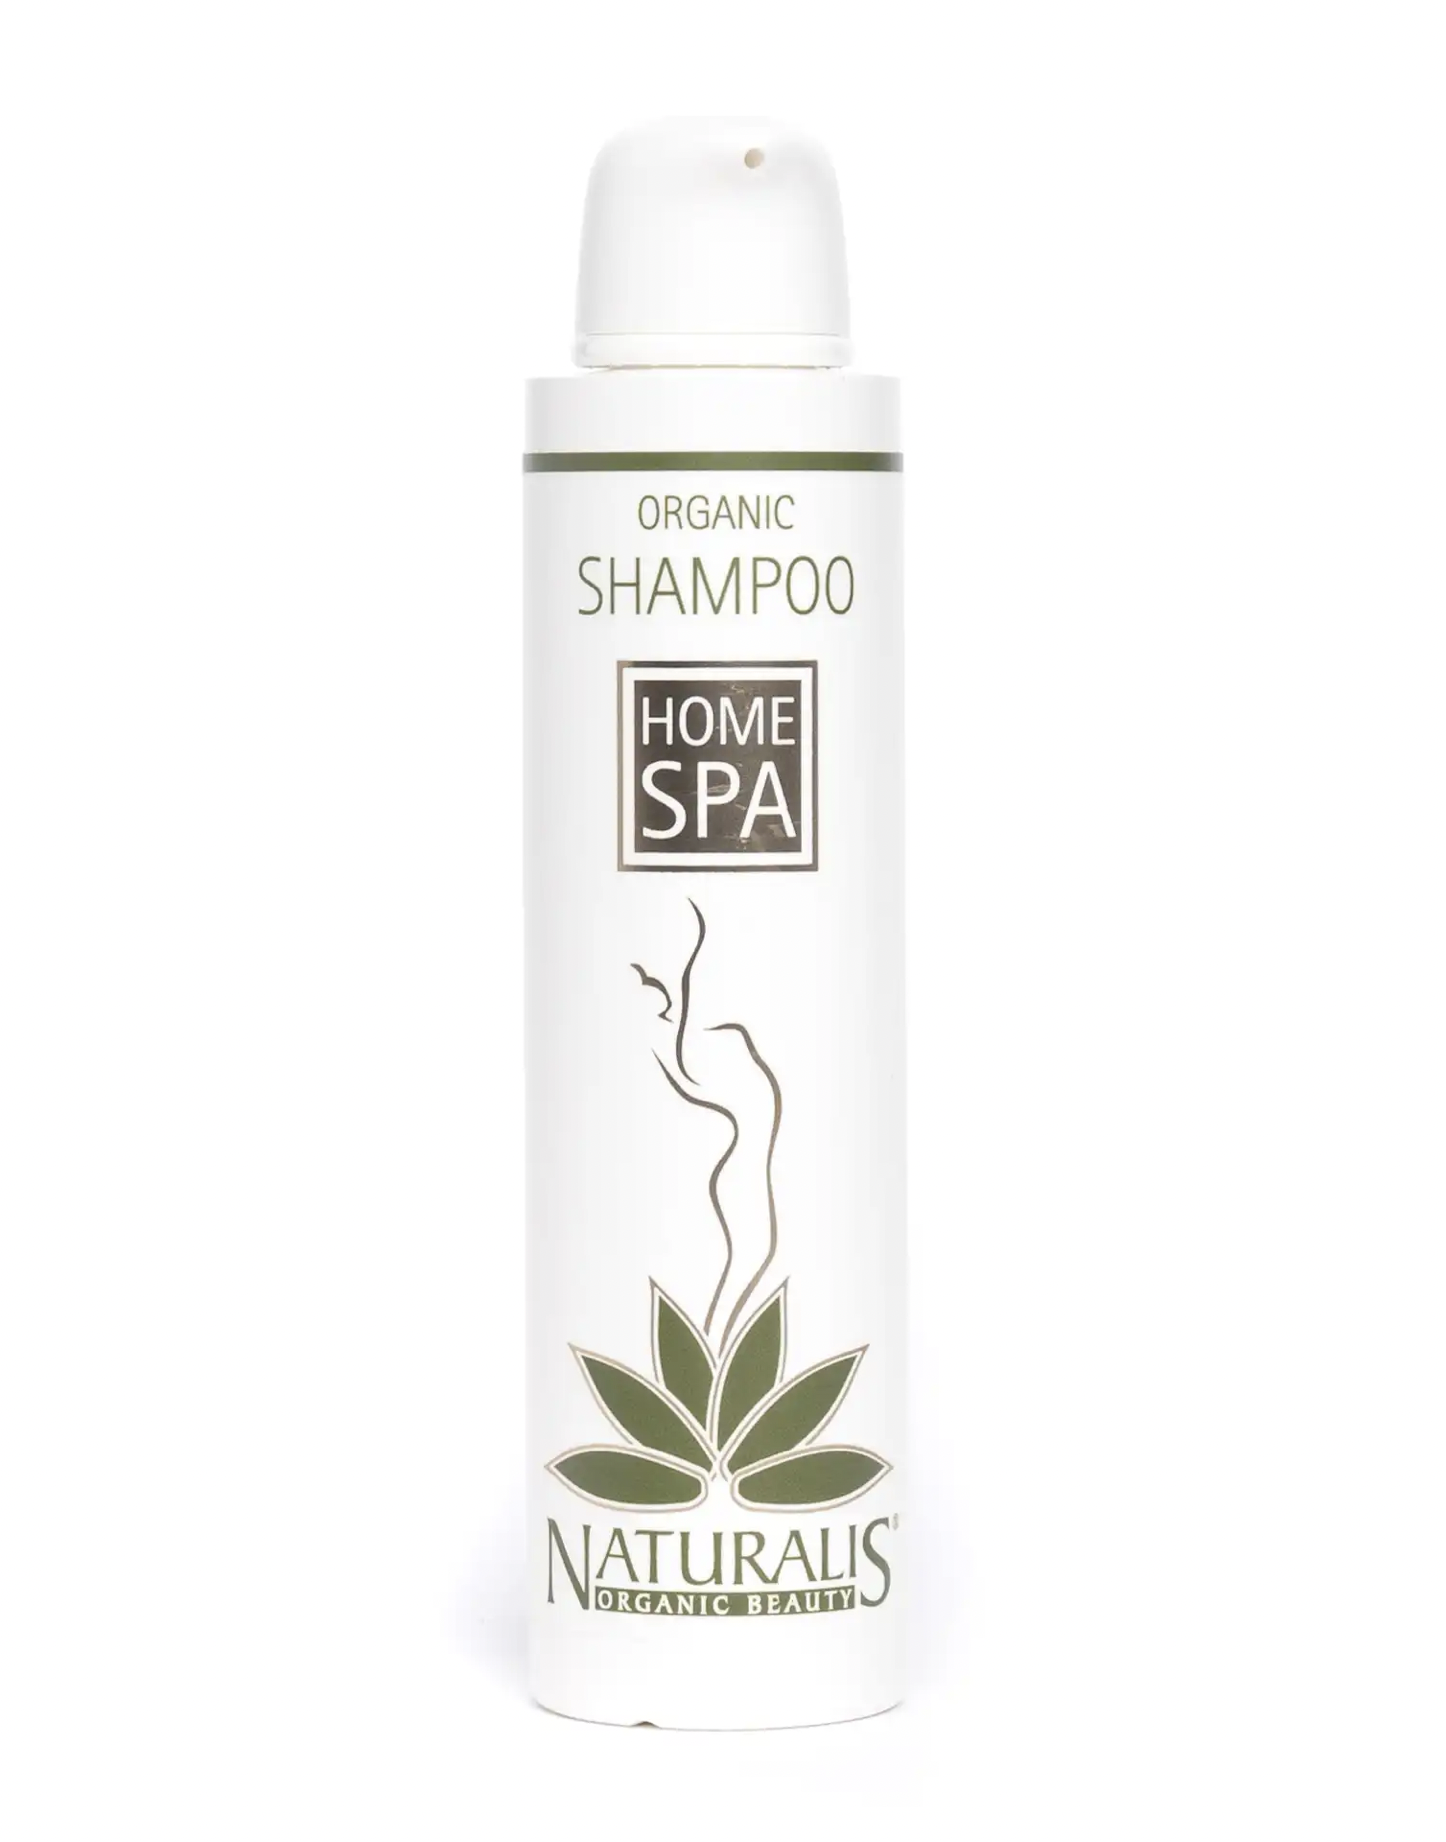 Naturalis Organic - Bio Home Spa vlasový šampon, 200 ml